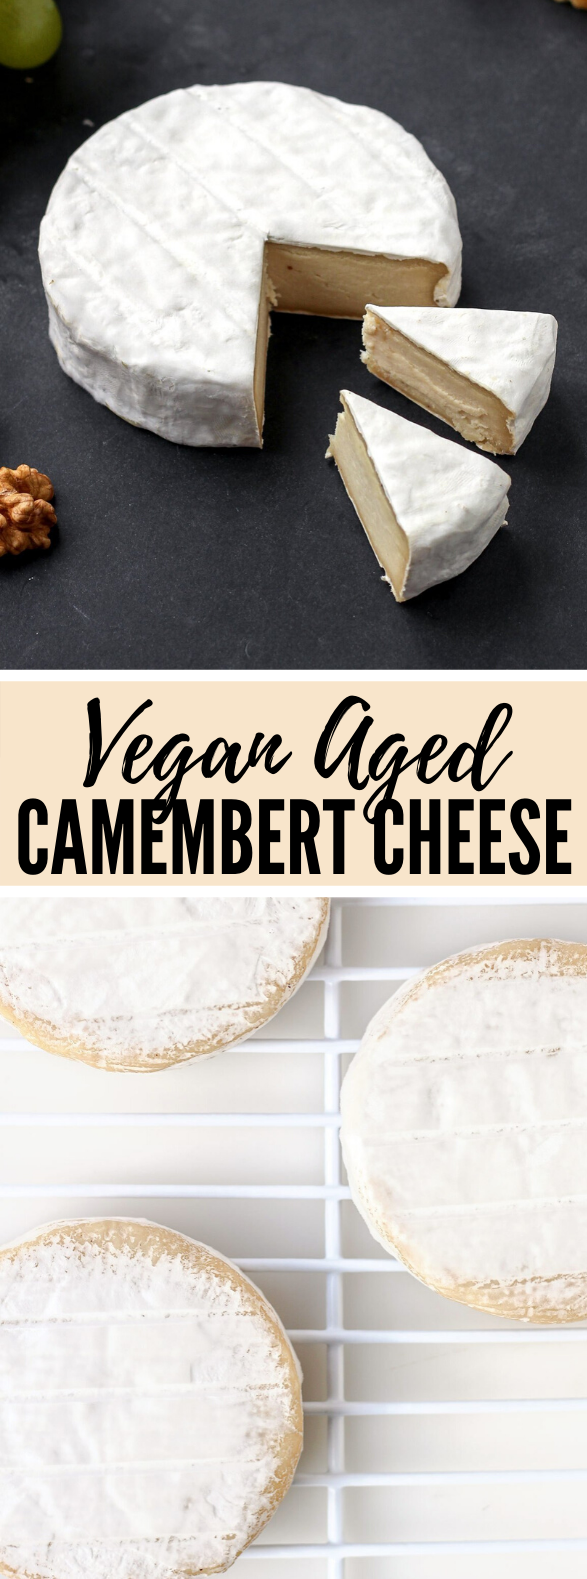 Vegan Aged Camembert Cheese #veggies #meals